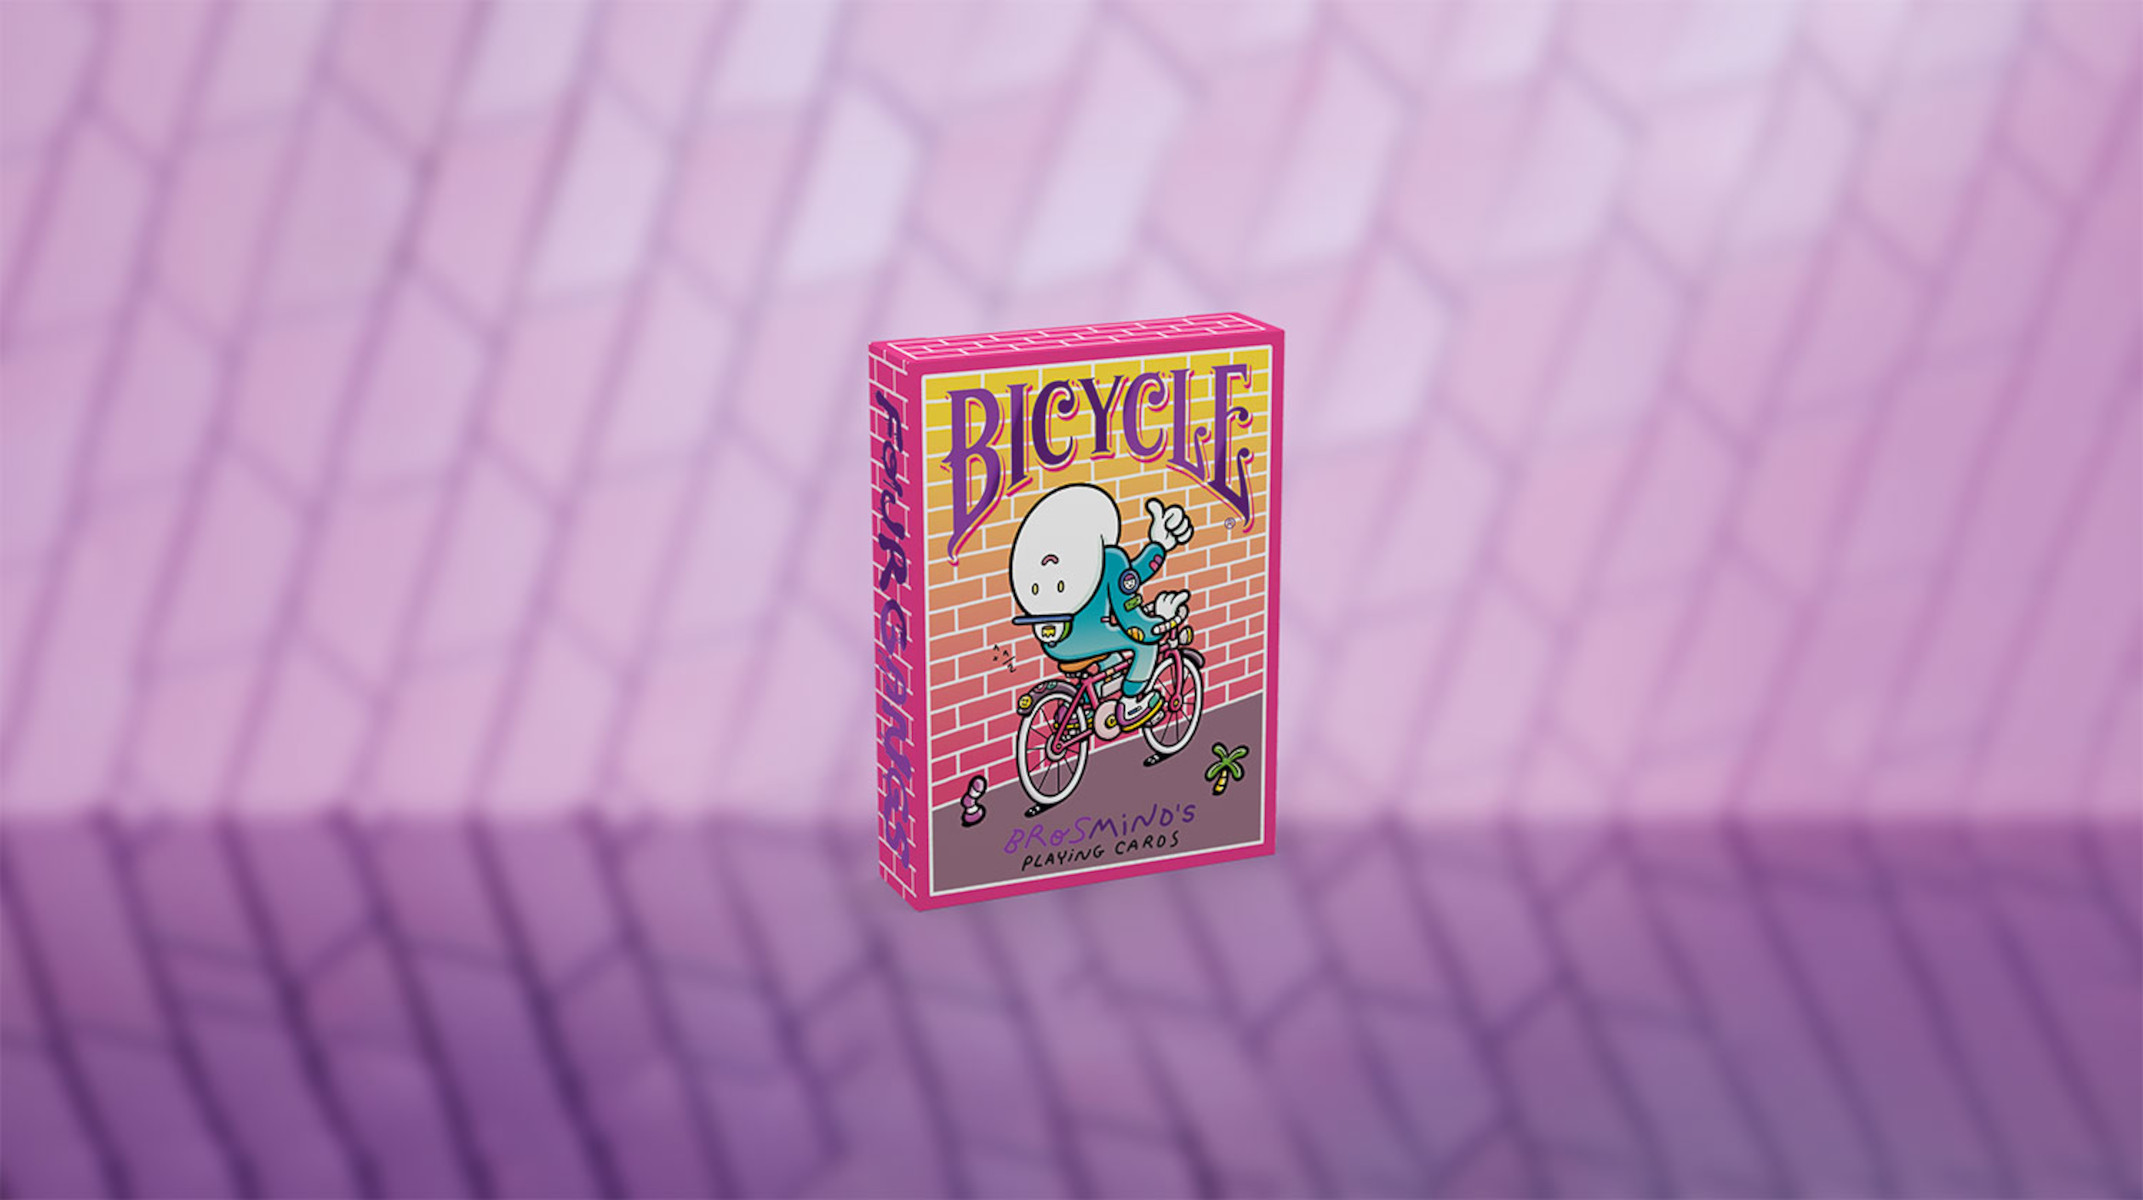 ASS ALTENBURGER Bicycle Kartendeck Kartenspiel - Gangs Brosmind - Four